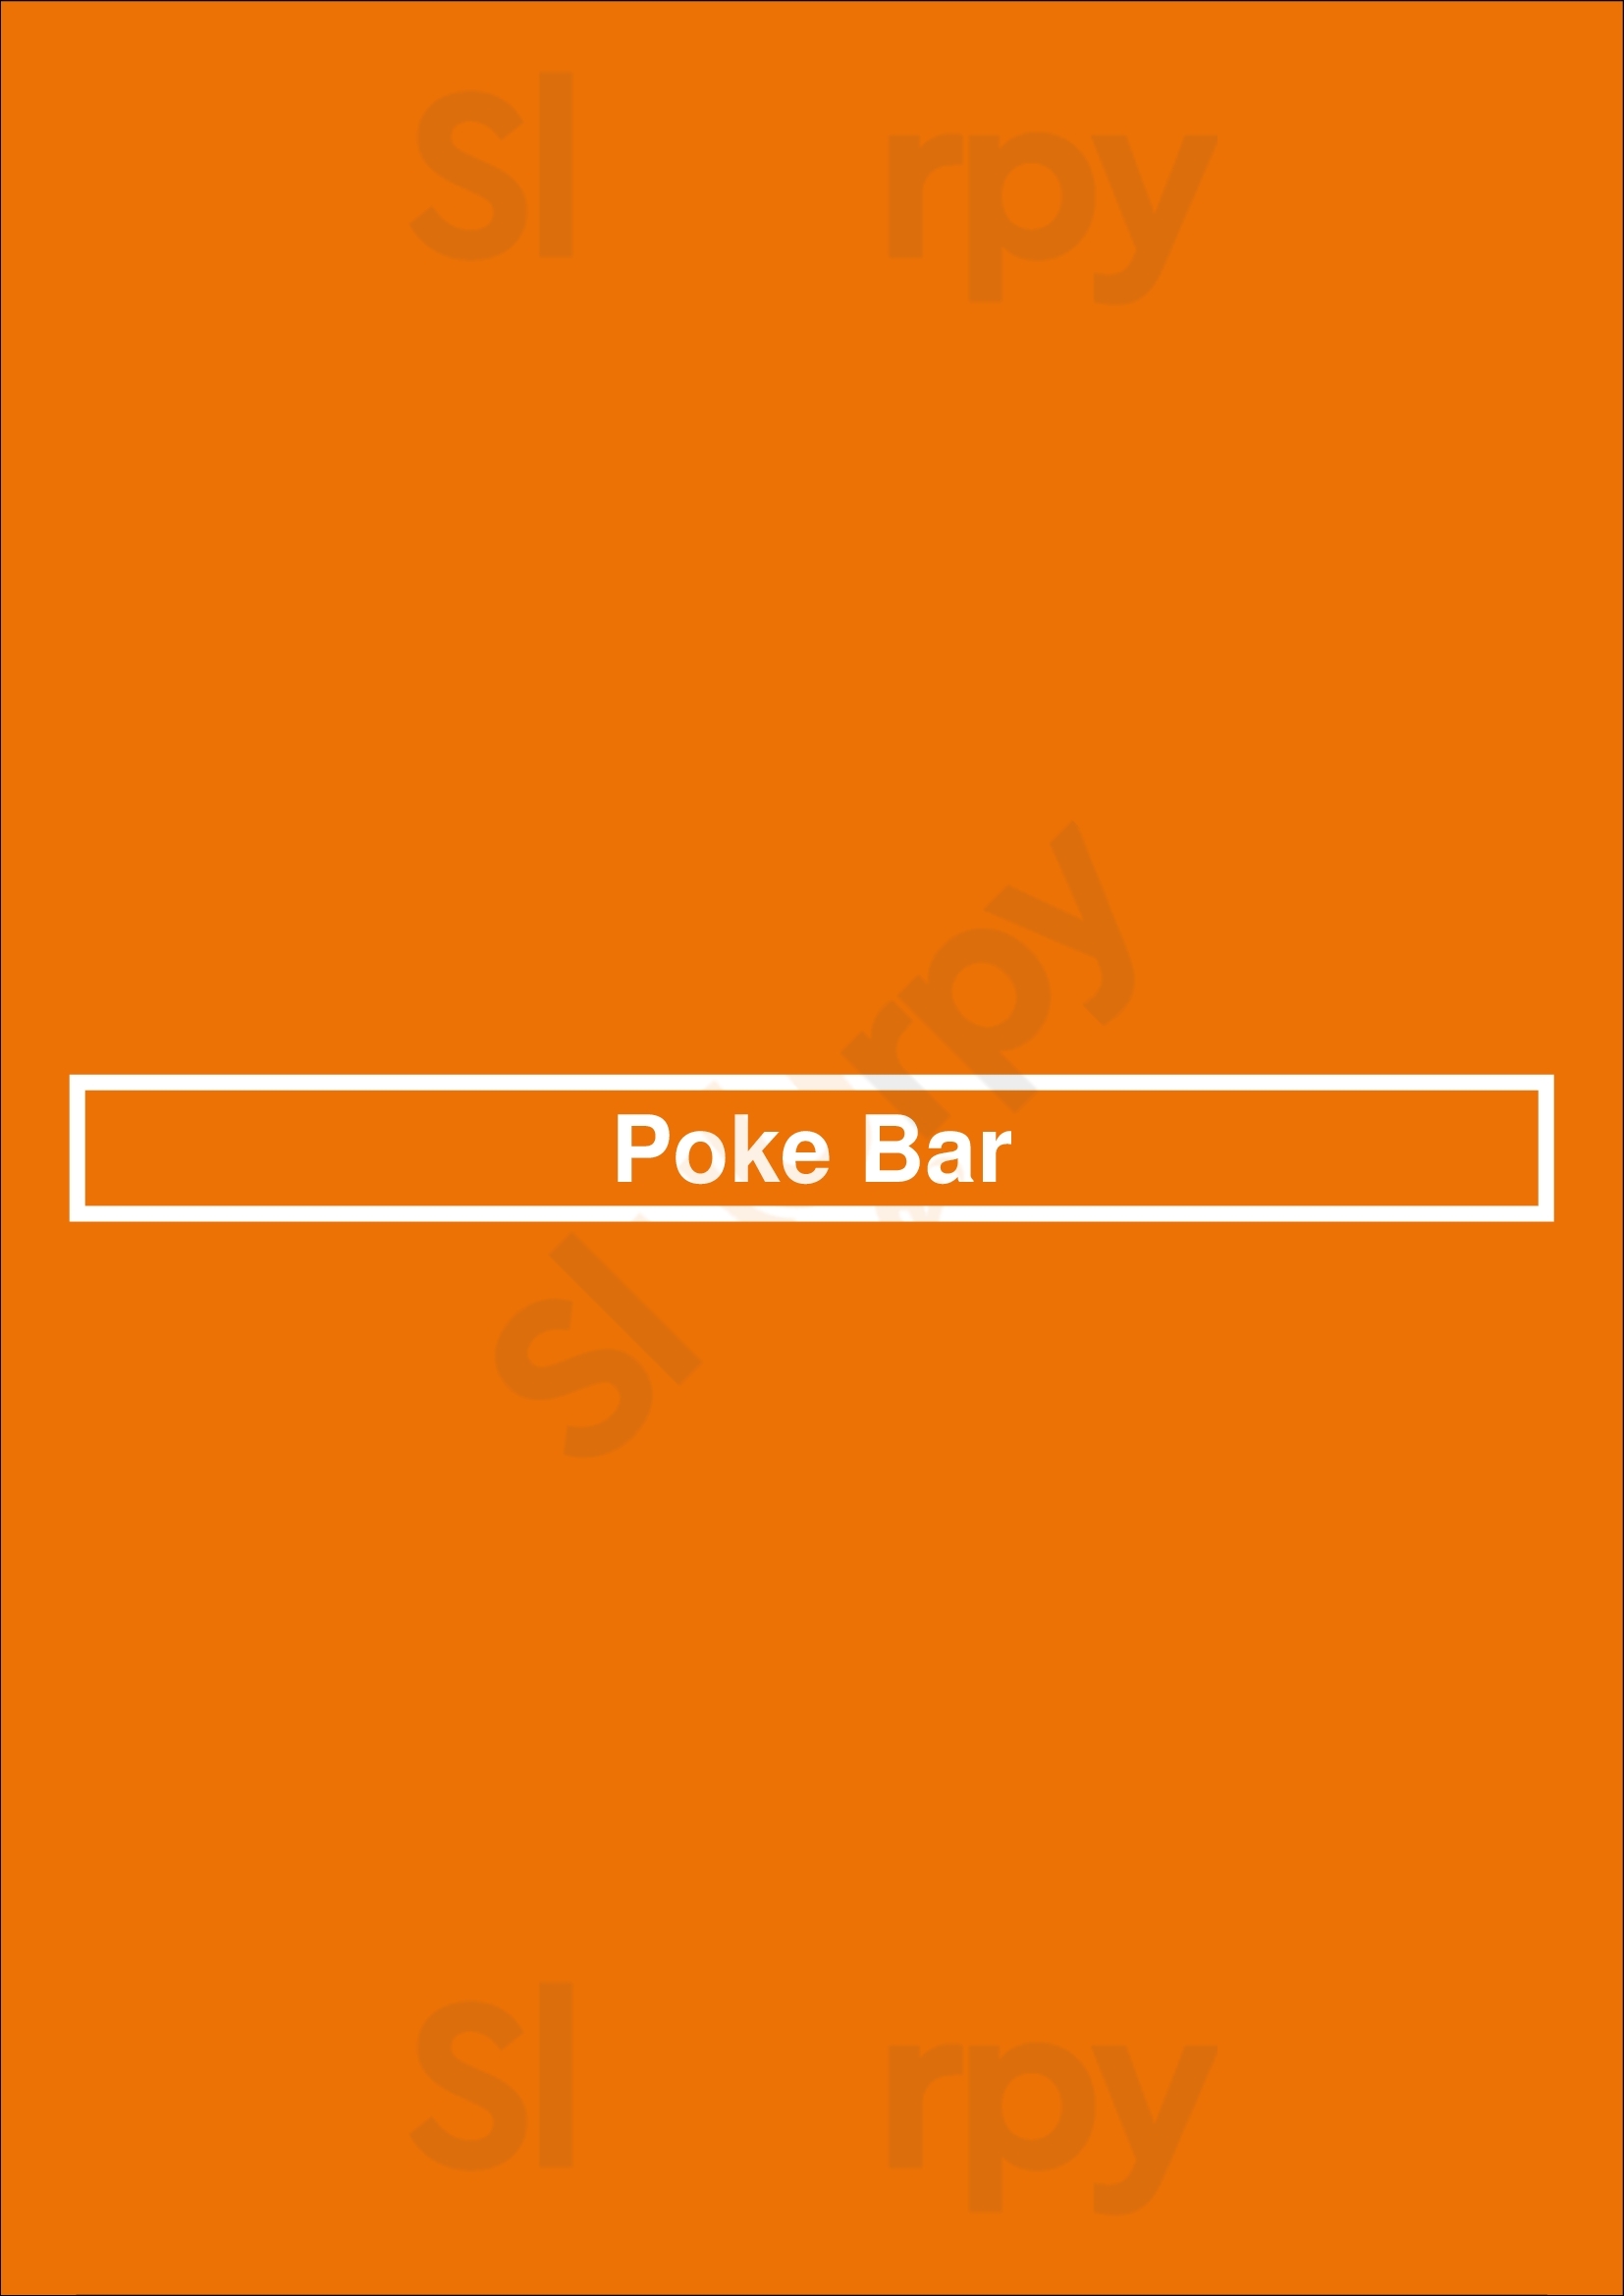 Poke Bar New York City Menu - 1